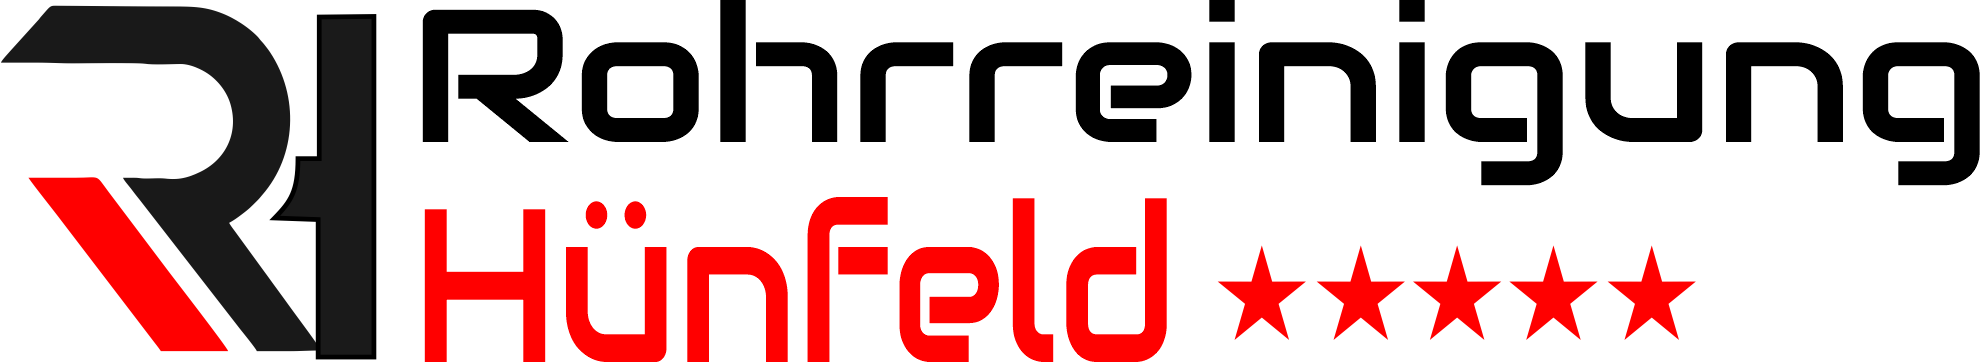 Rohrreinigung Hünfeld Logo